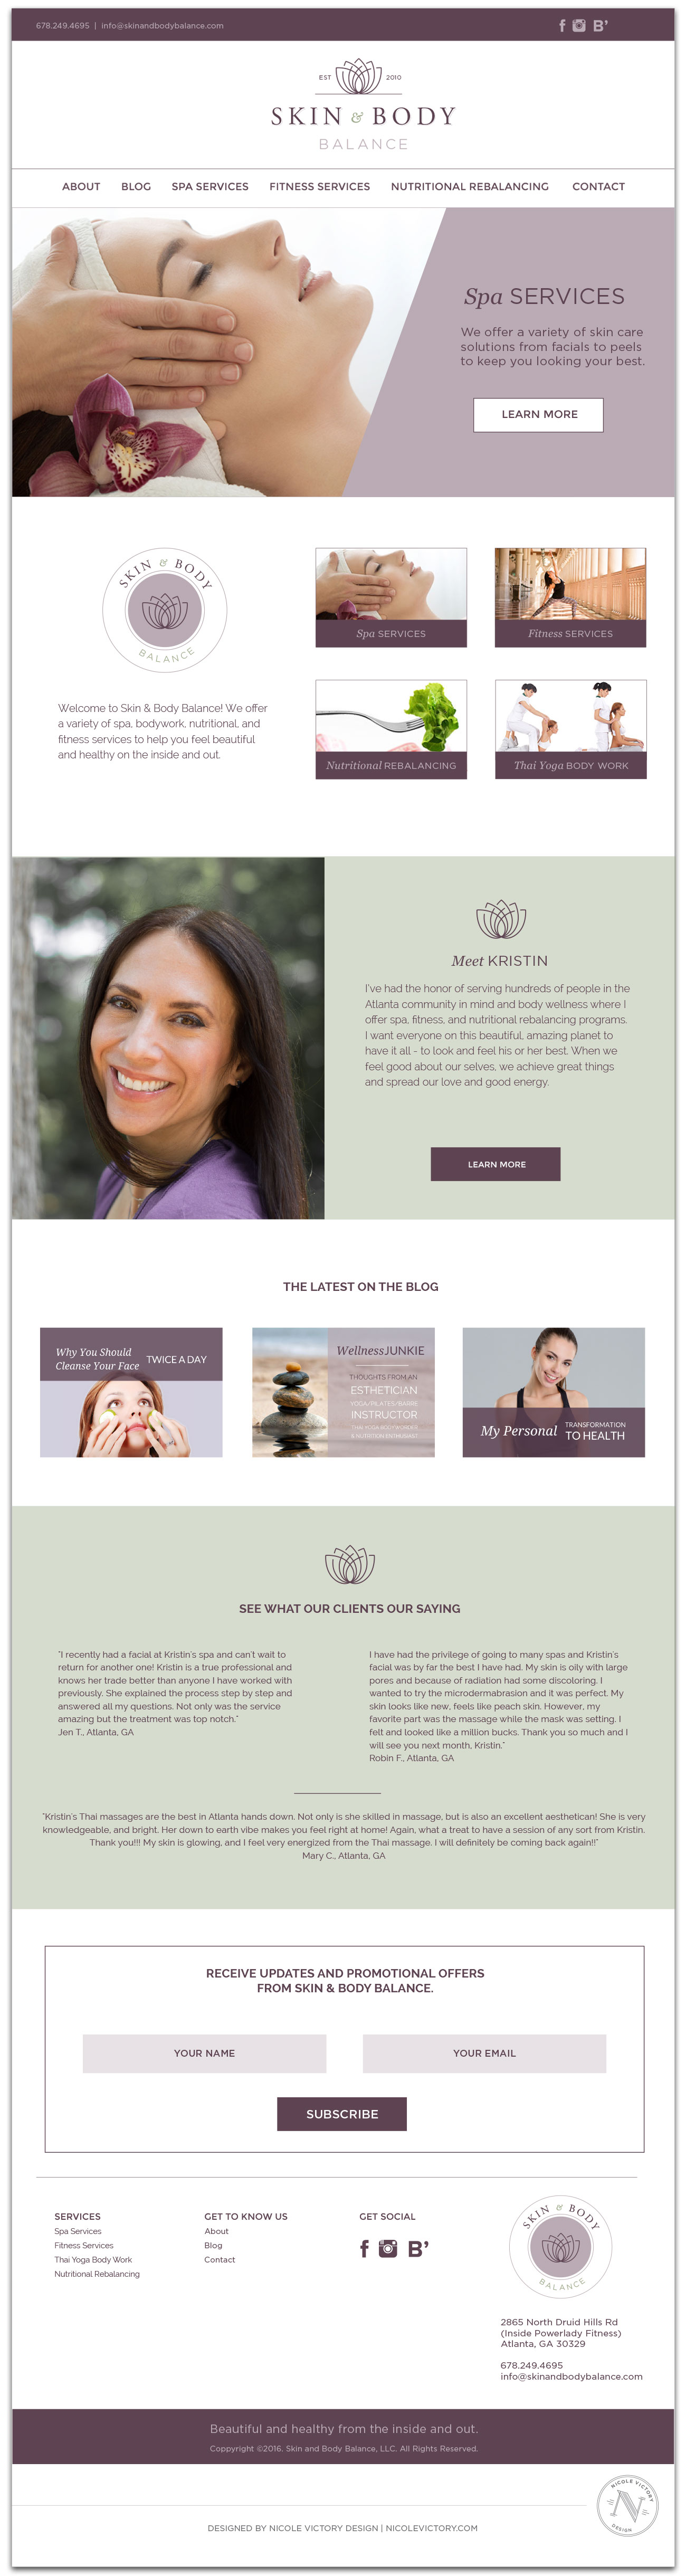 Skin and Body Balance Website Design | Nicole Victory Design